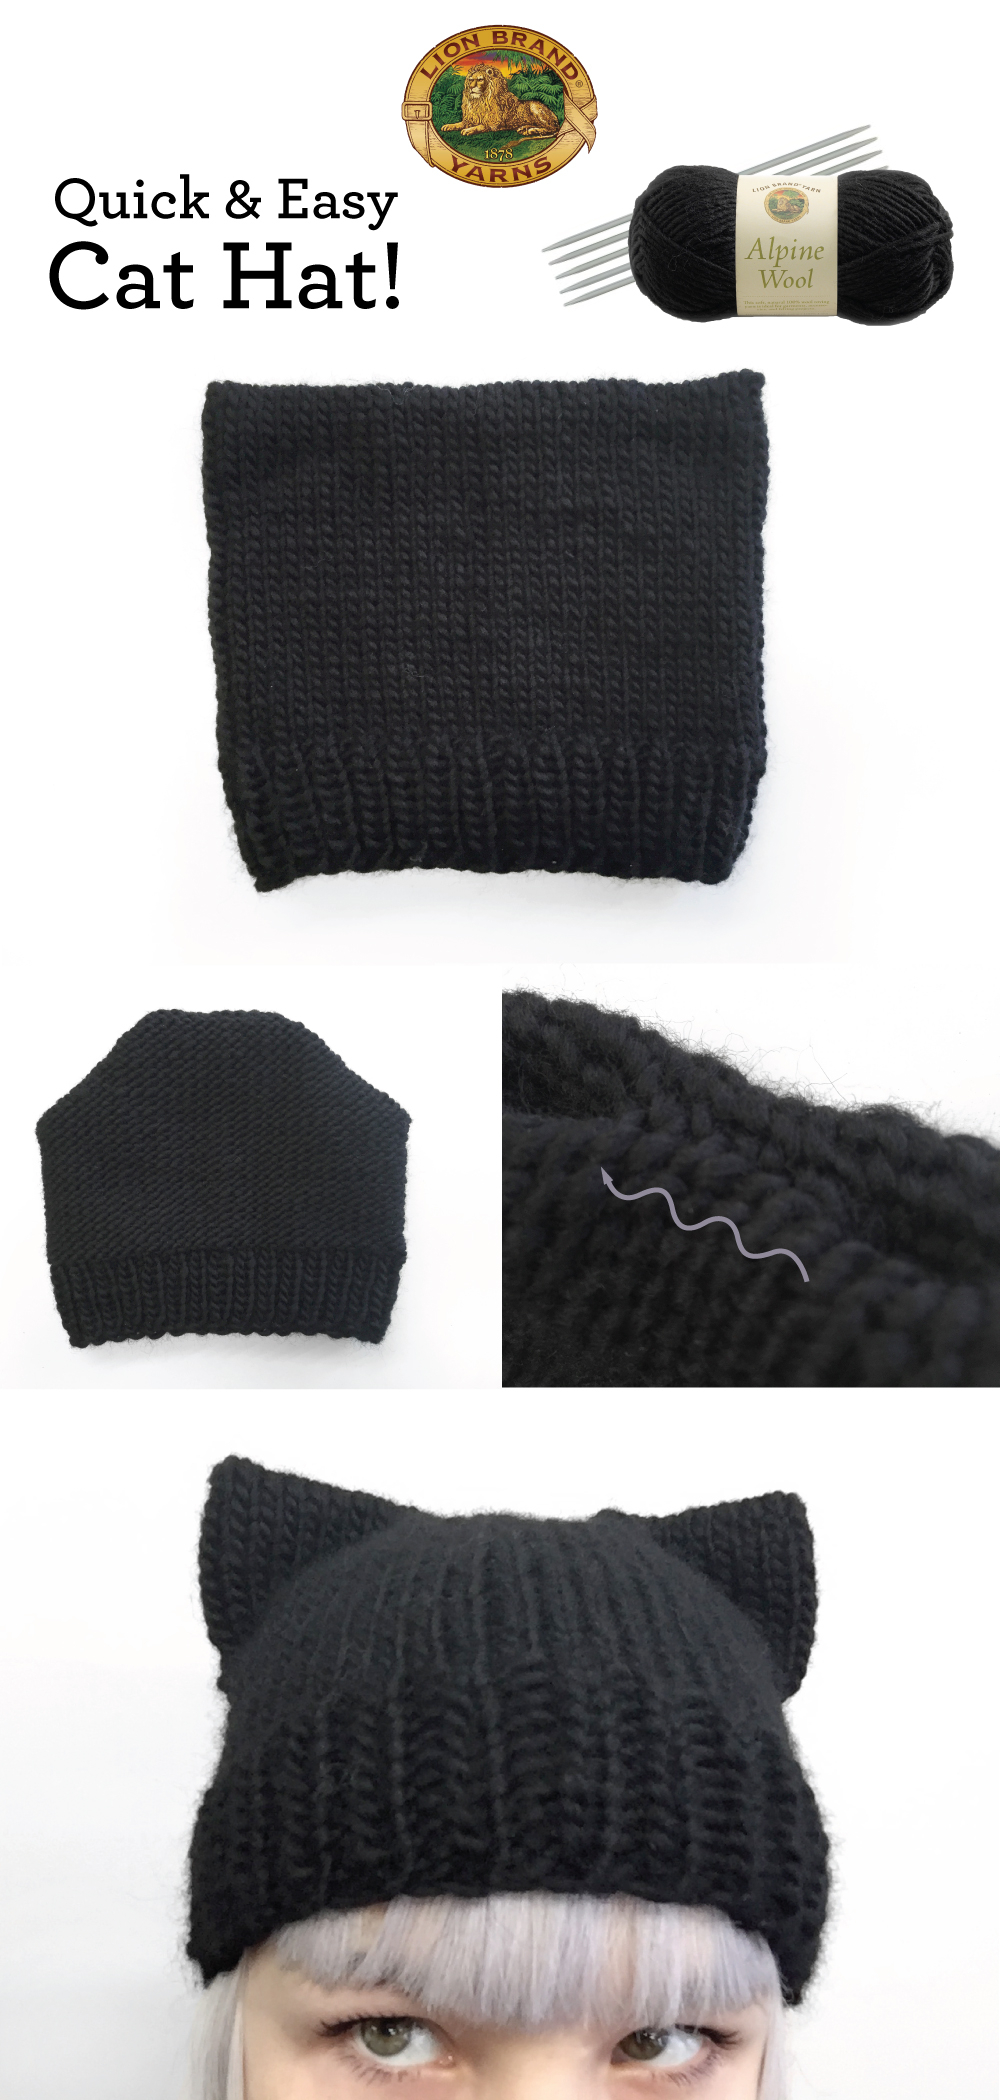 Crochet Cat Hat Pattern Knit A Quick Easy Cat Hat Lion Brand Notebook